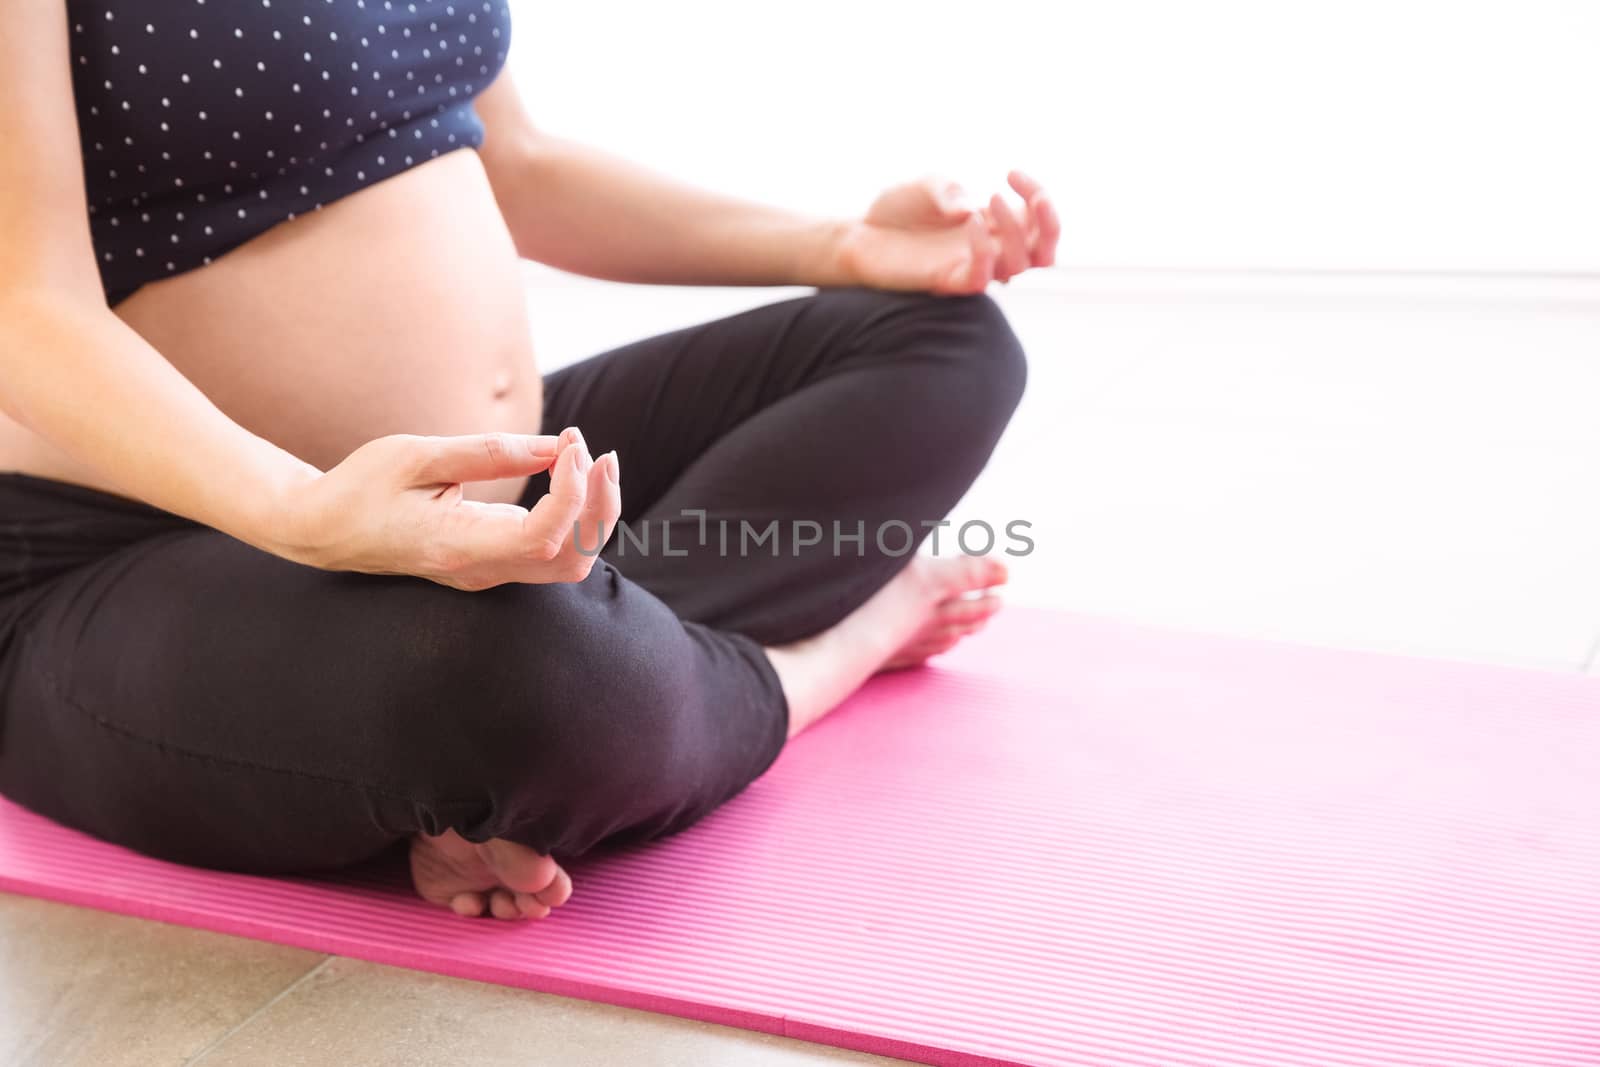 Pregnant woman keeping in shape by Wavebreakmedia